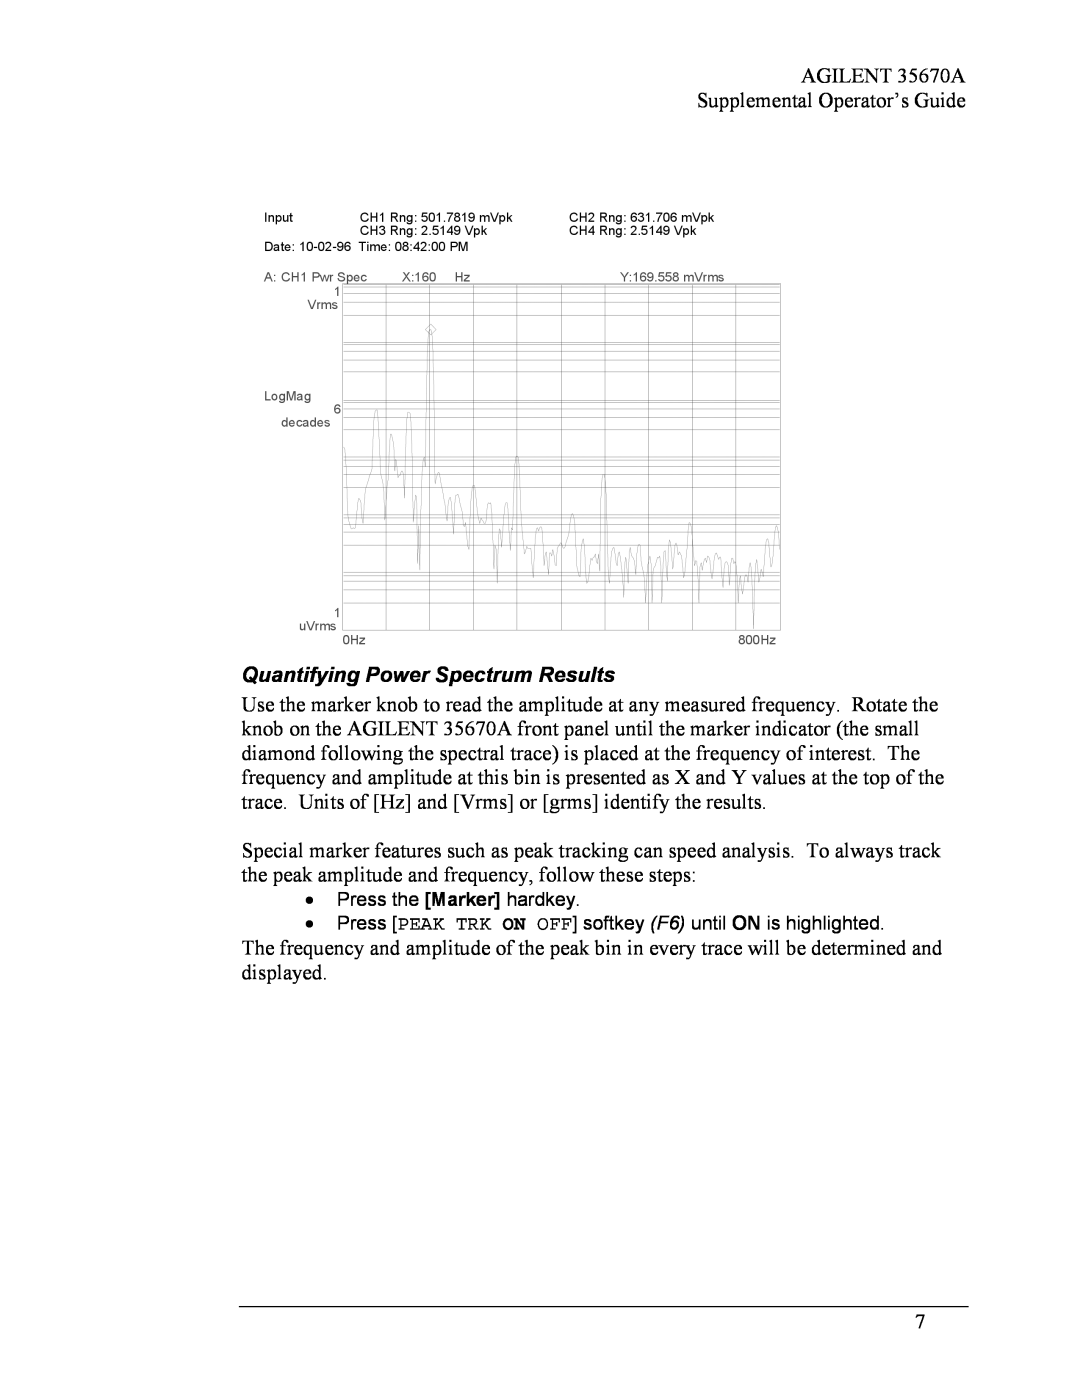 Agilent Technologies Agilent 35670A manual Quantifying Power Spectrum Results 